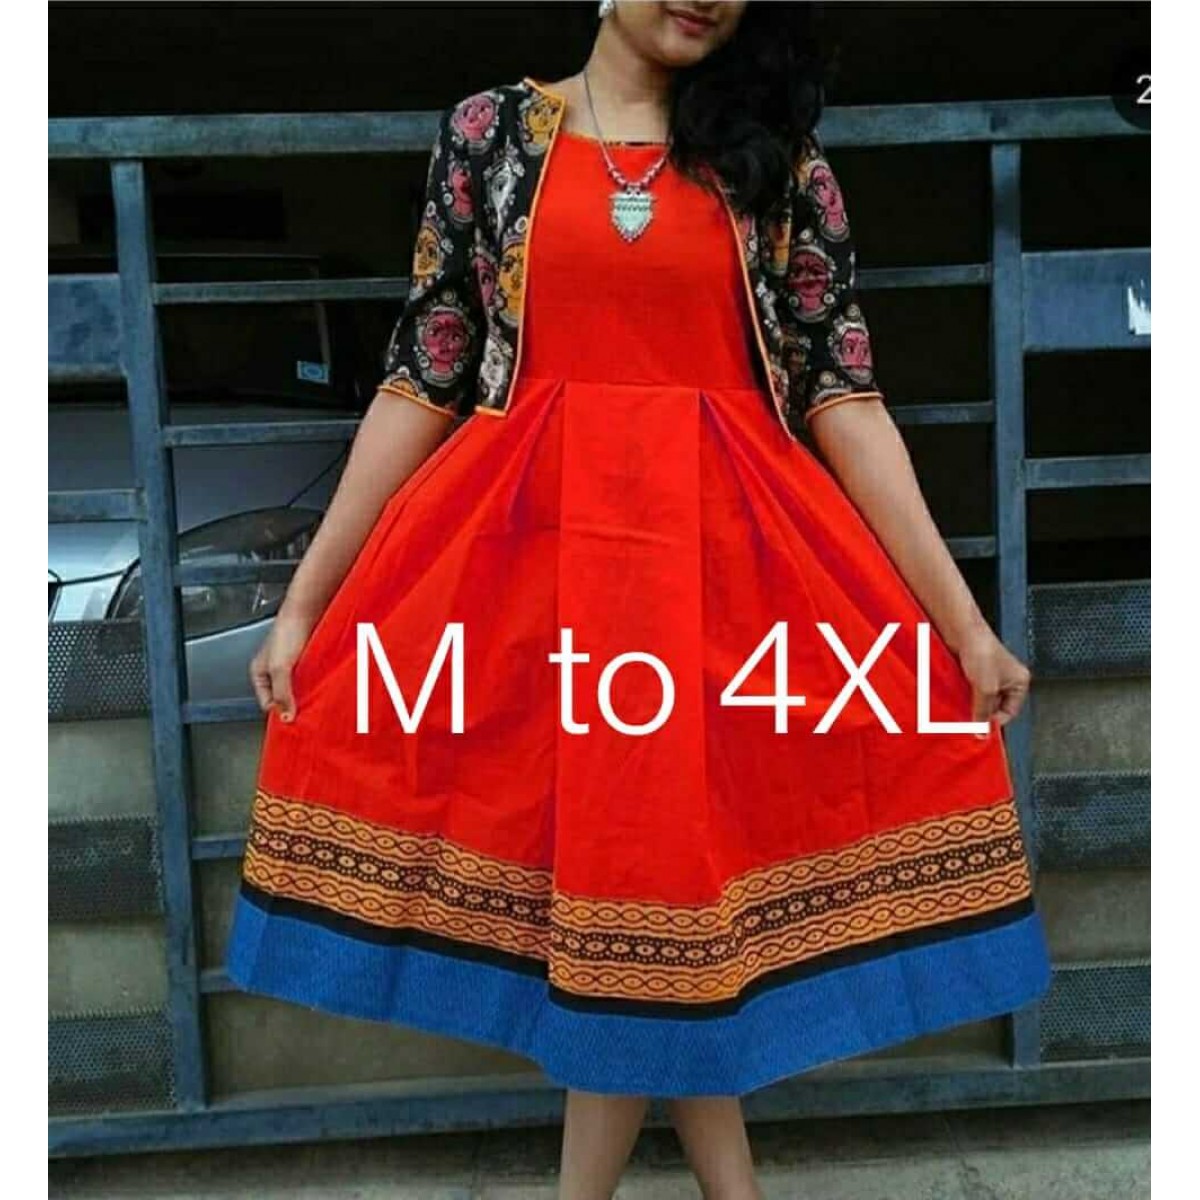 Kalamkari dresses on Pinterest